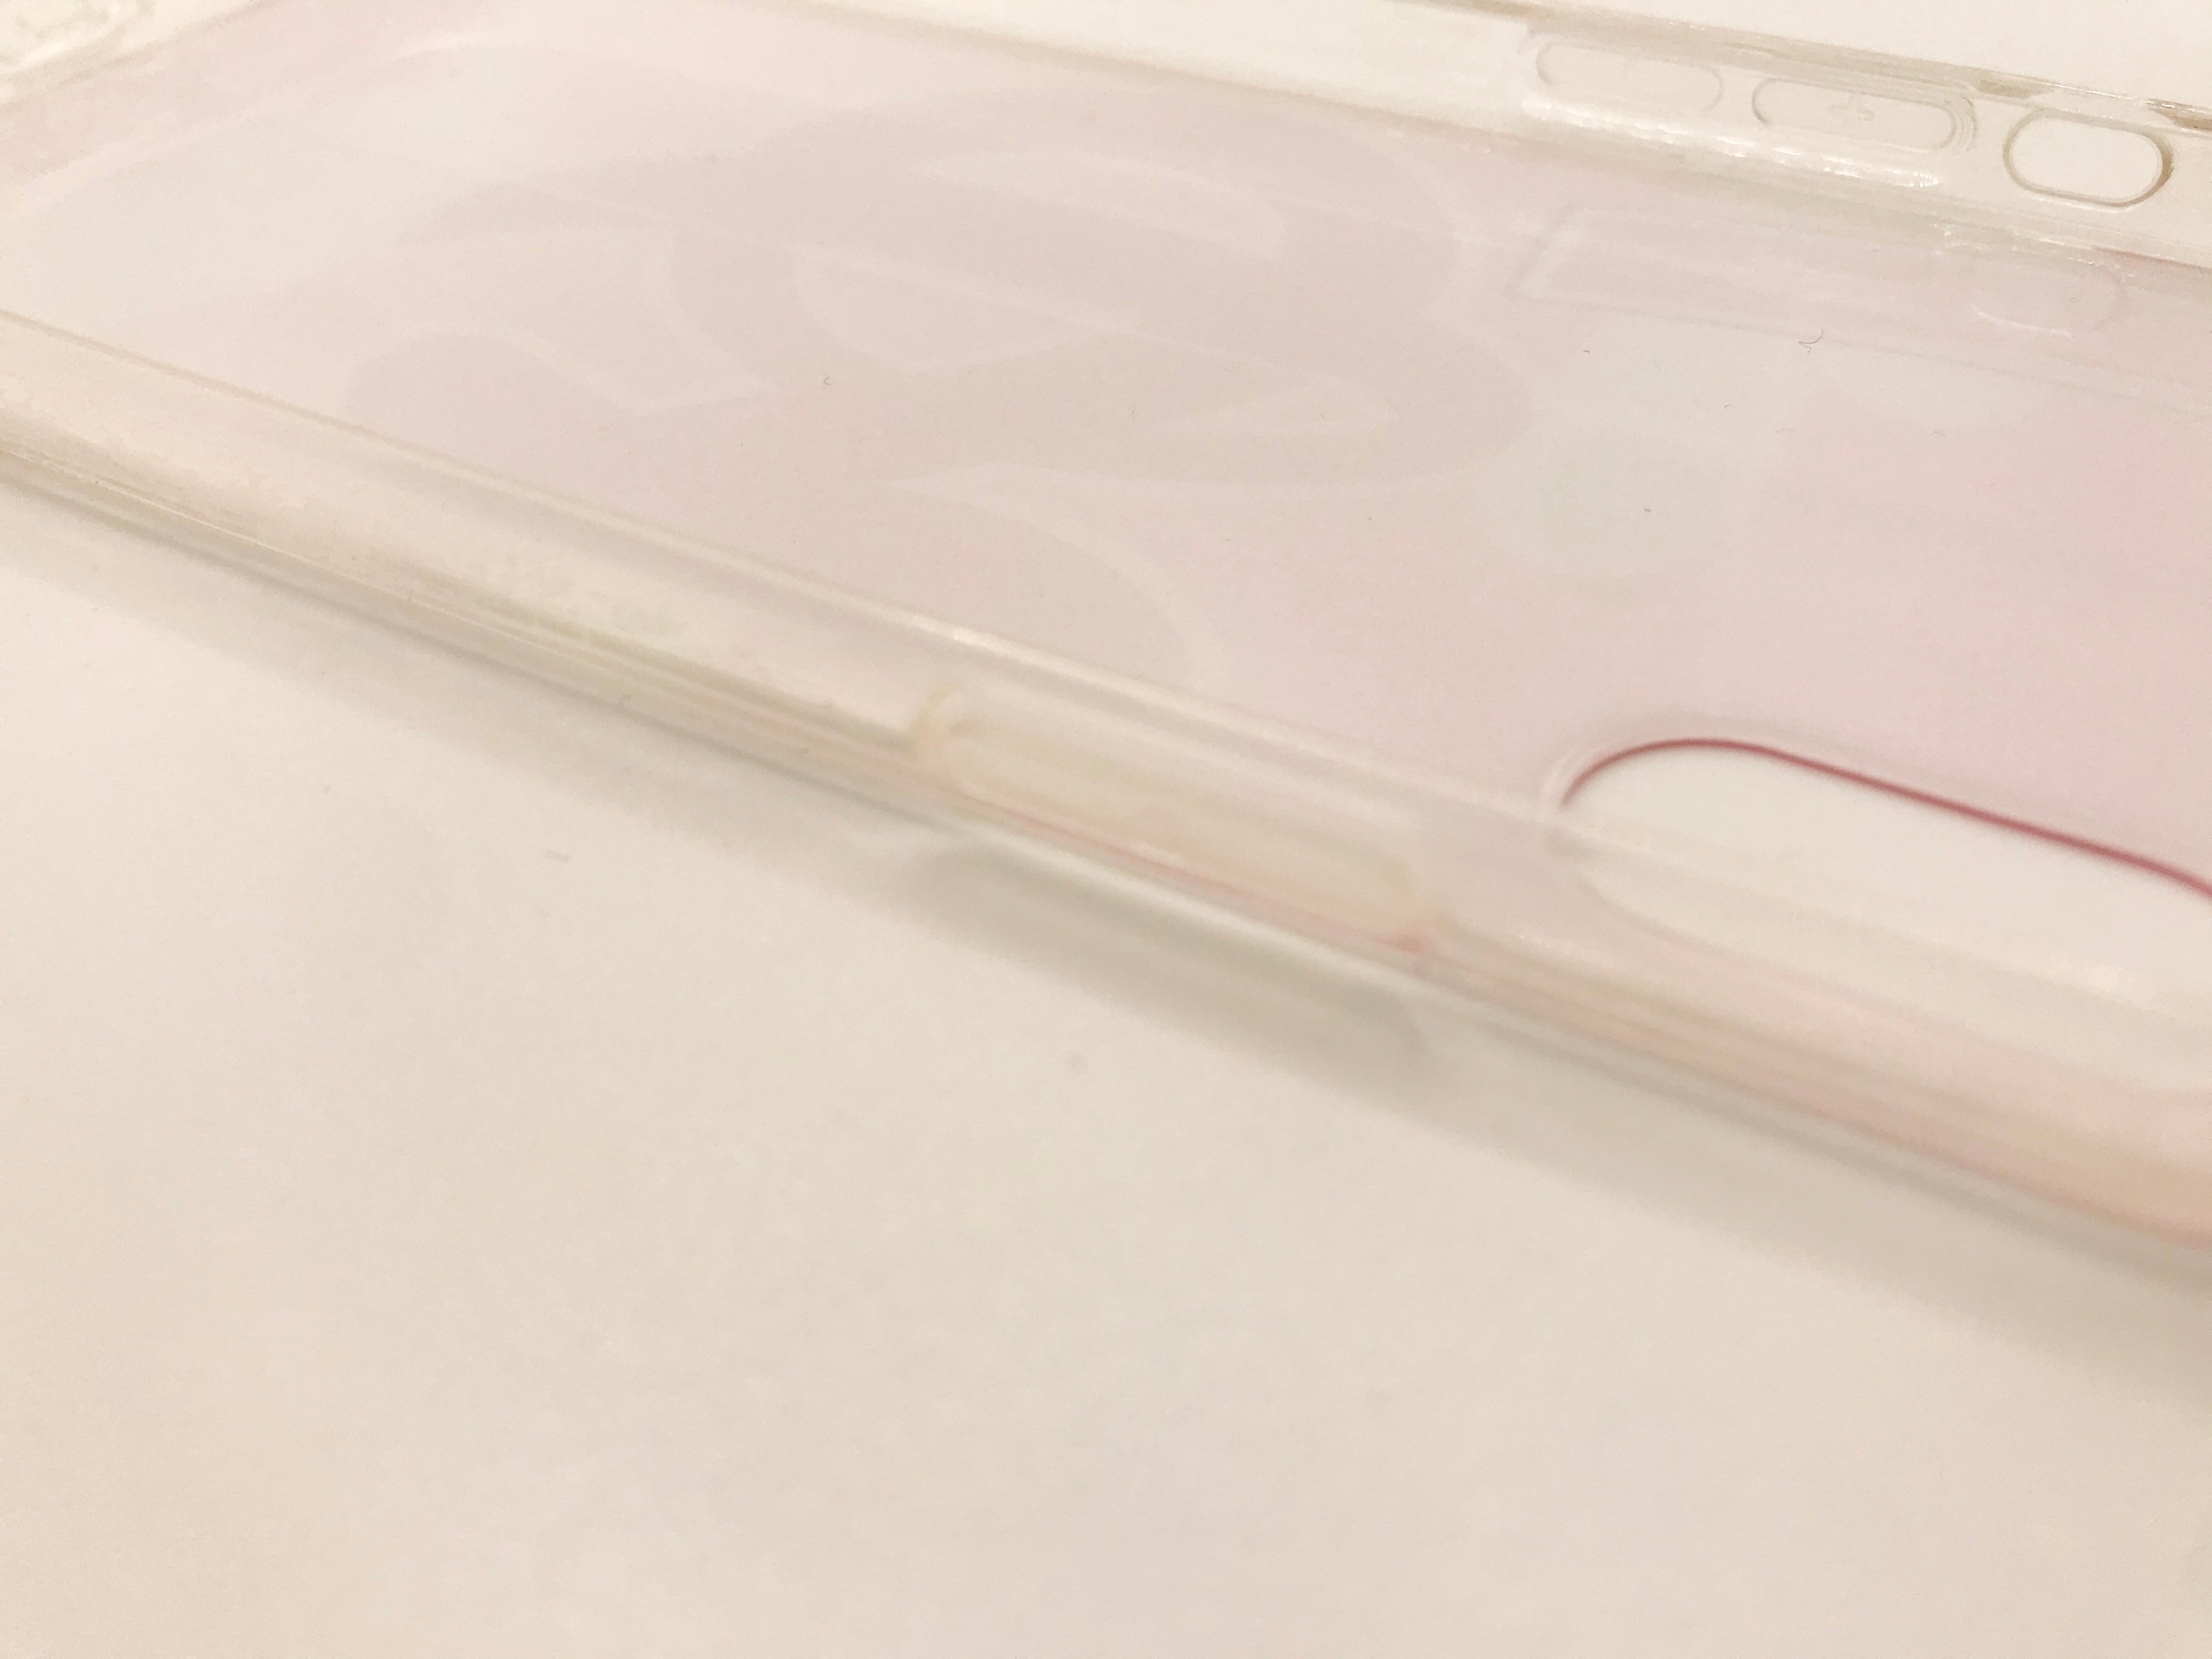 【80%OFF】Bunkyo Bath Association Mobile Case Pink (may mobile fan)